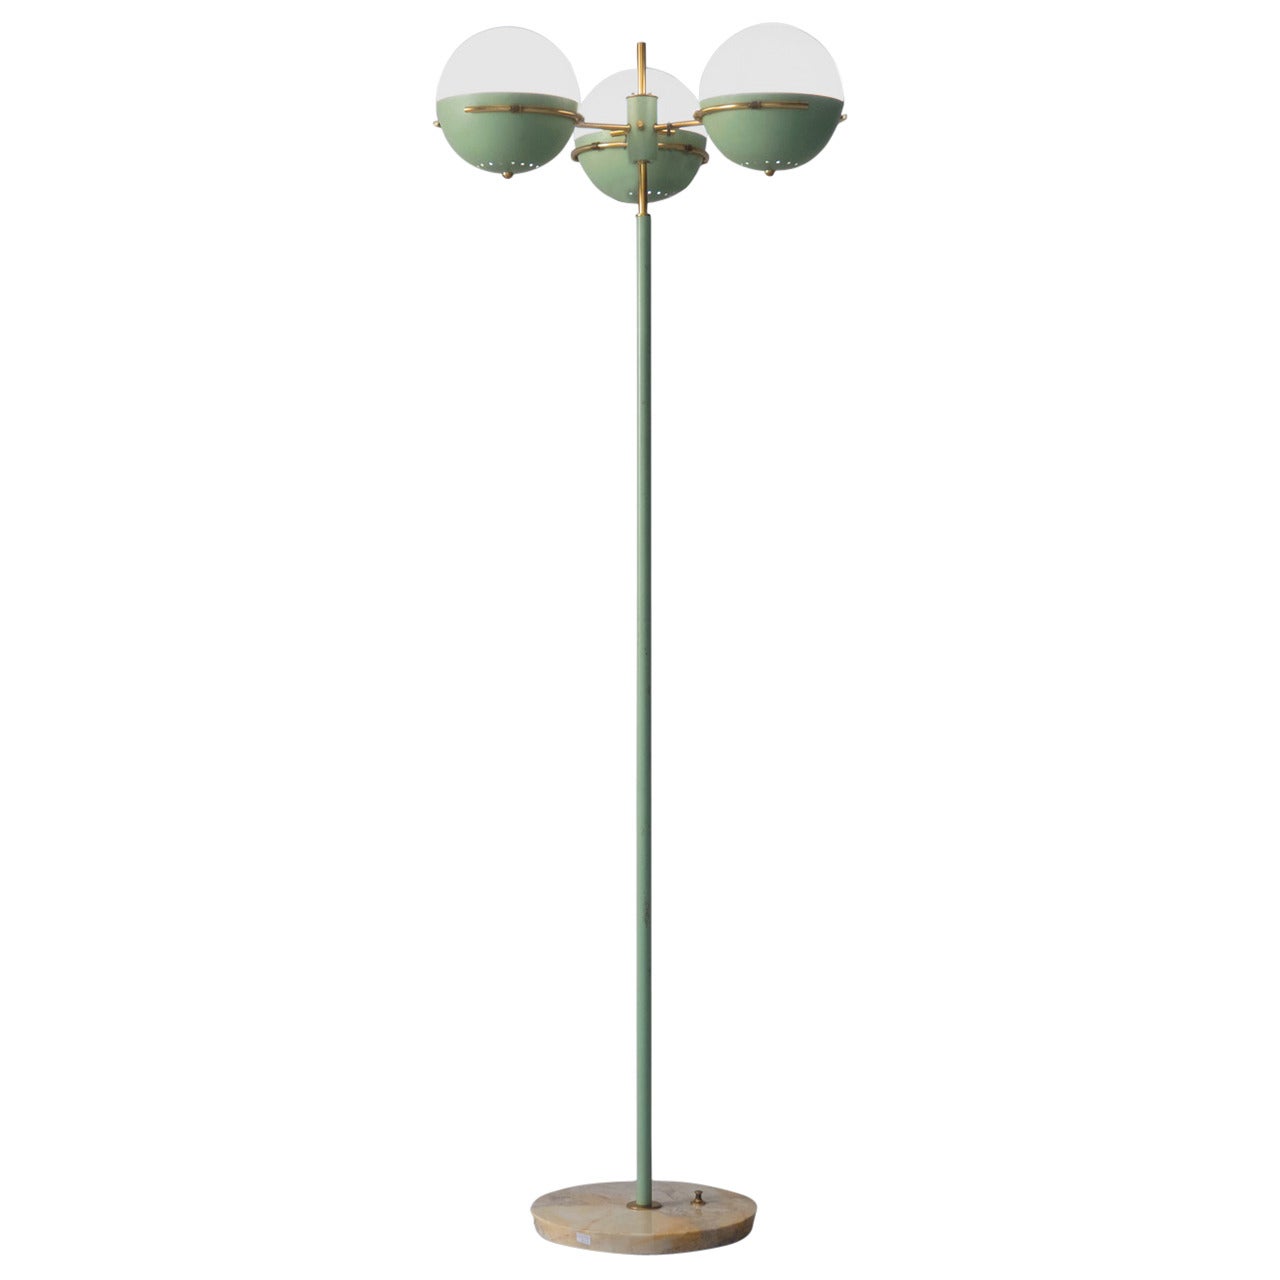 Floor Lamp by Stilnovo with Brass Details